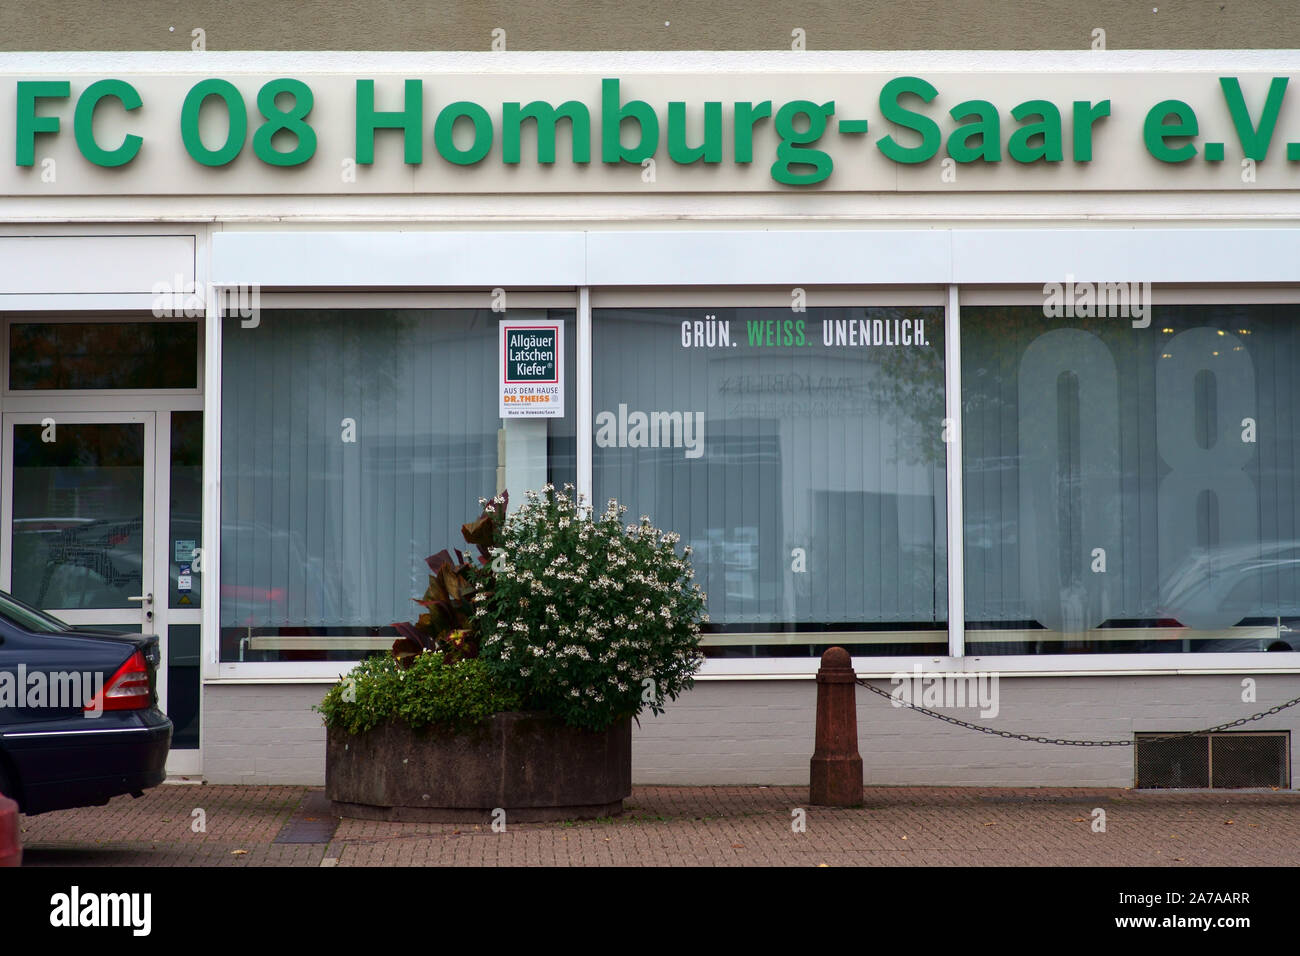 Homburg, Allemagne - 19 octobre 2019 : La façade extérieure du bureau du club de football FC 08 Homburg-Saar e.V. avec logo le 19 octobre, 2019 dans H Banque D'Images